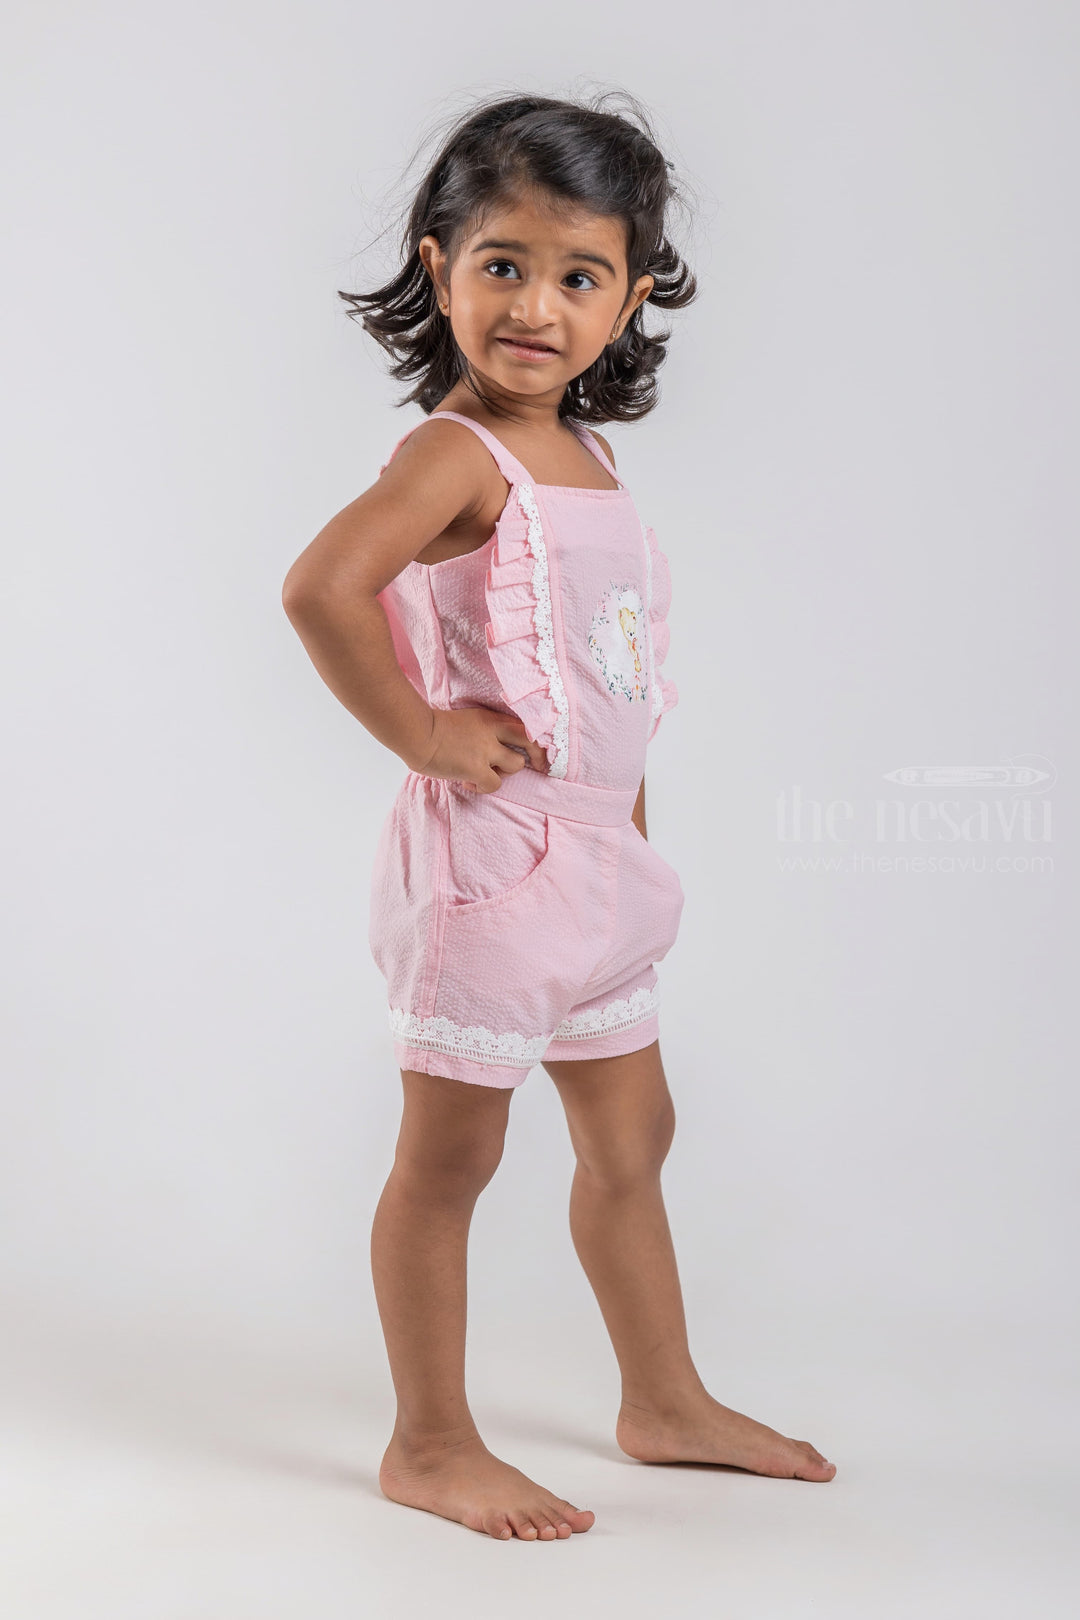 The Nesavu Baby Dungarees Cute Teddy Bear Printed Sleeveless Pink Top and Pink Trouser Set for Baby Girls psr silks Nesavu